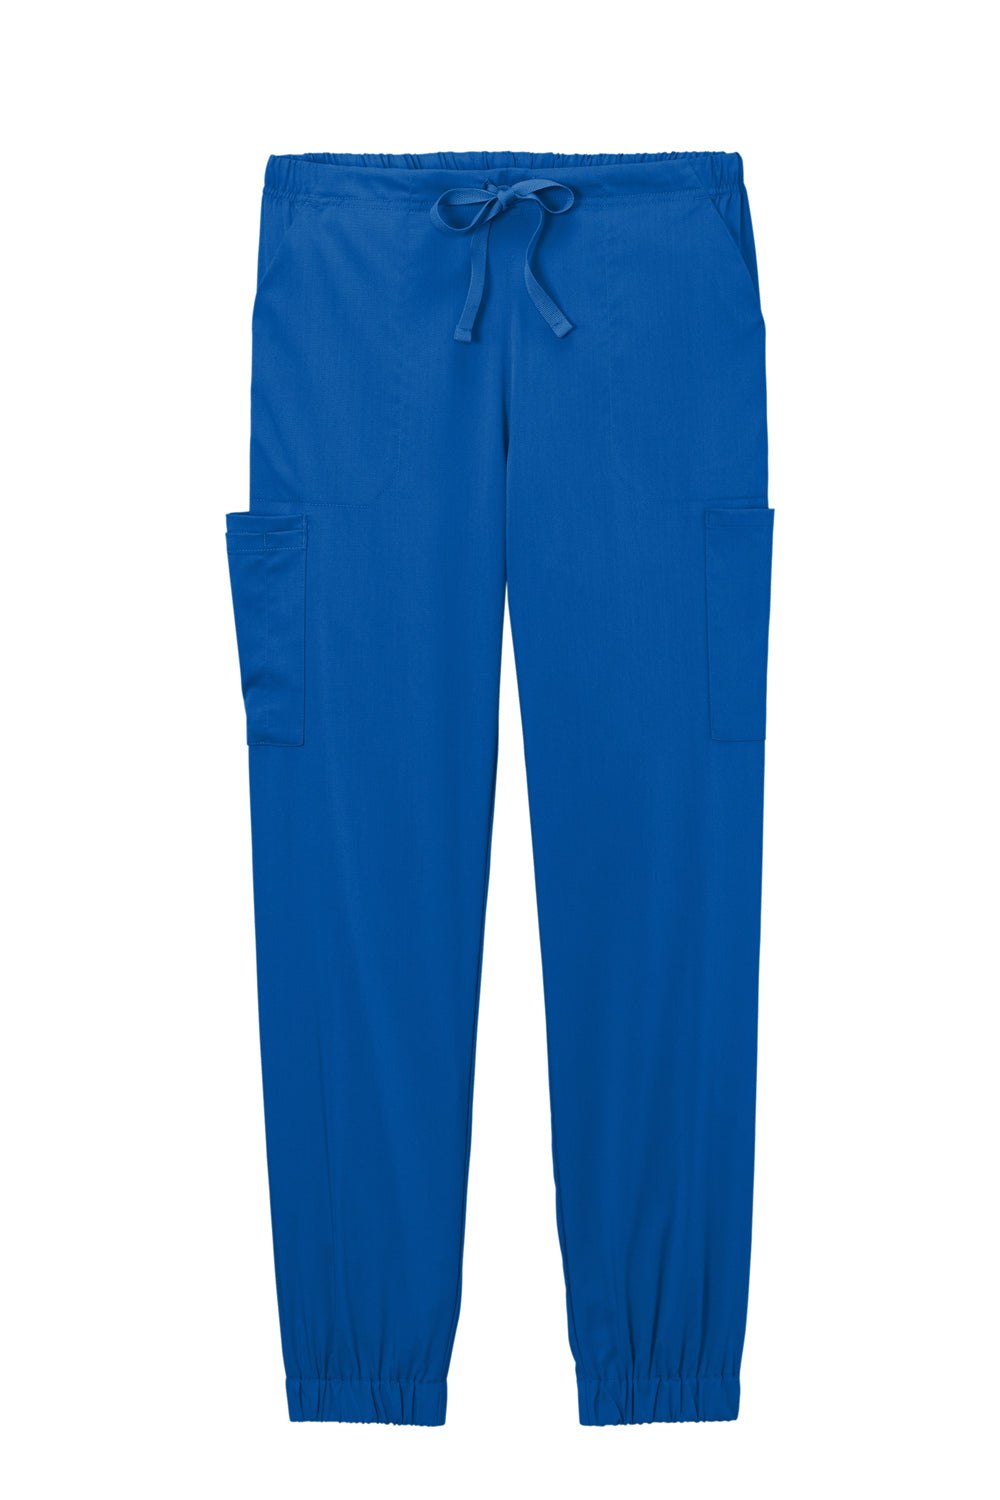 Wonderwink WW4258 Premiere Flex Jogger Pants w/ Pockets Royal Blue Flat Front